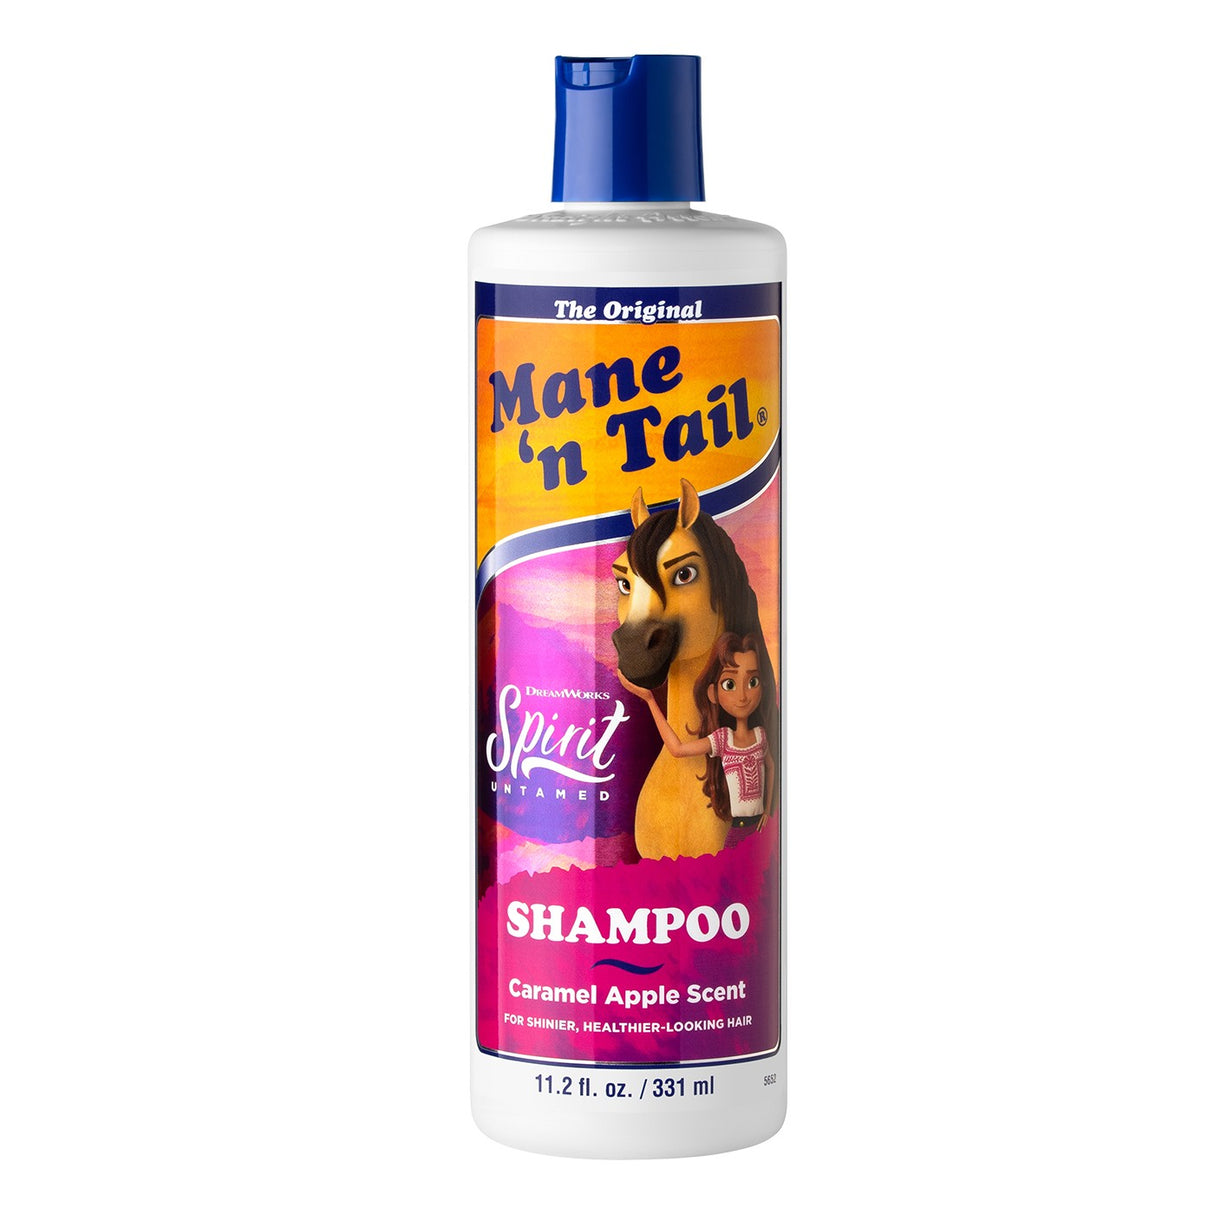 Straight Arrow Mane N Tail Spirit Untamed Caramel Apple Scented Shampoo 331mL